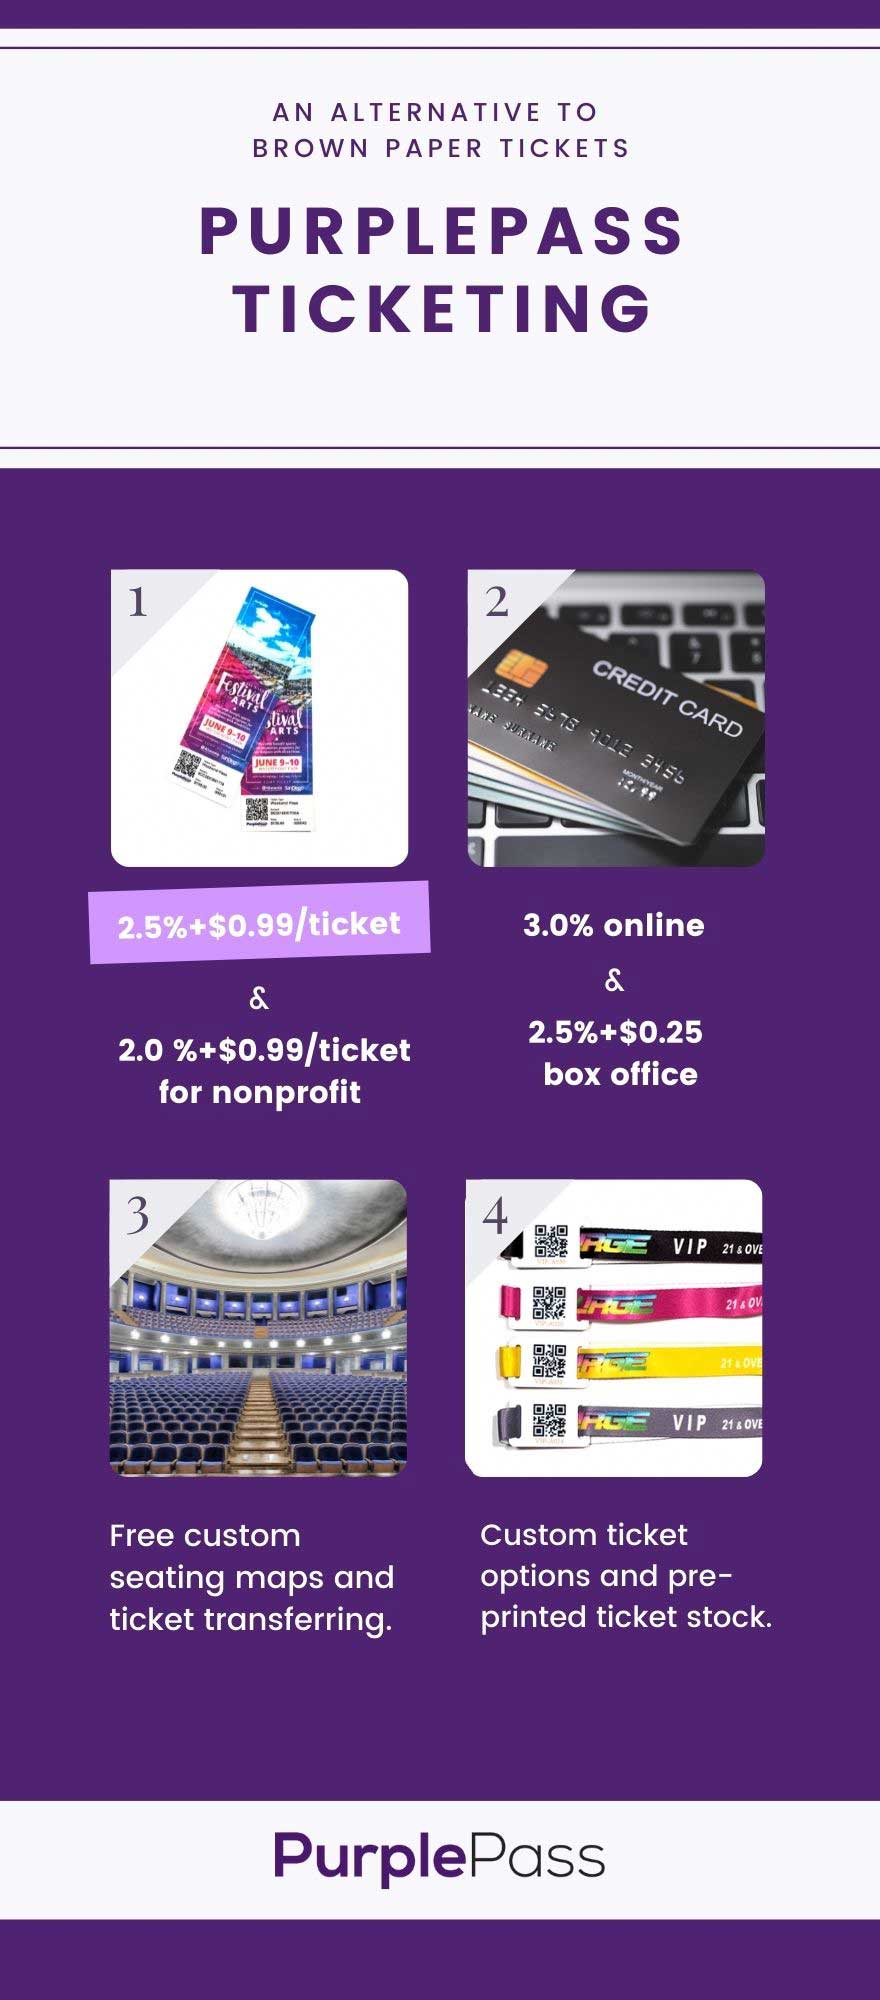 Purplepass-ticketing-options-vs-brown-paper-ticket